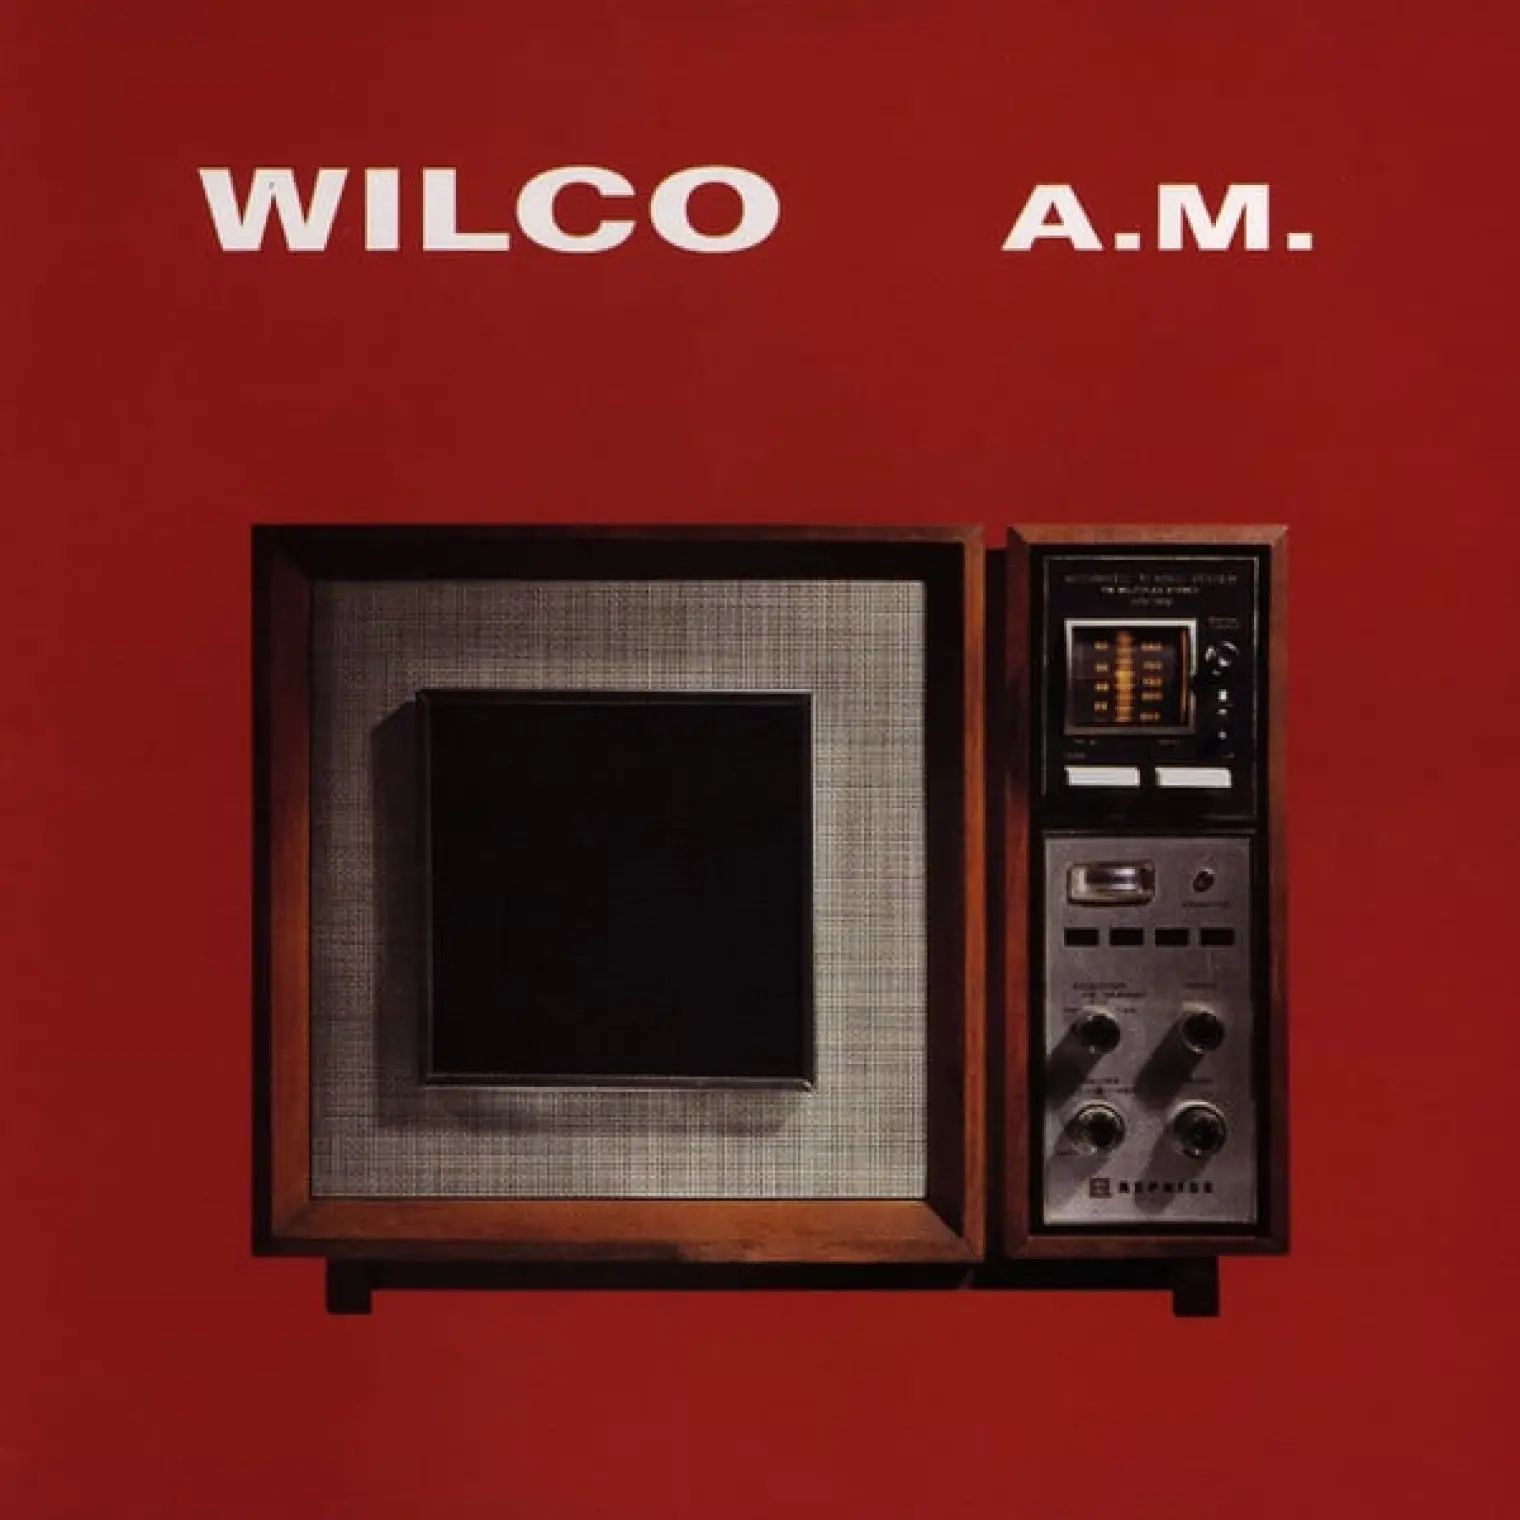 A.M. -  Wilco 